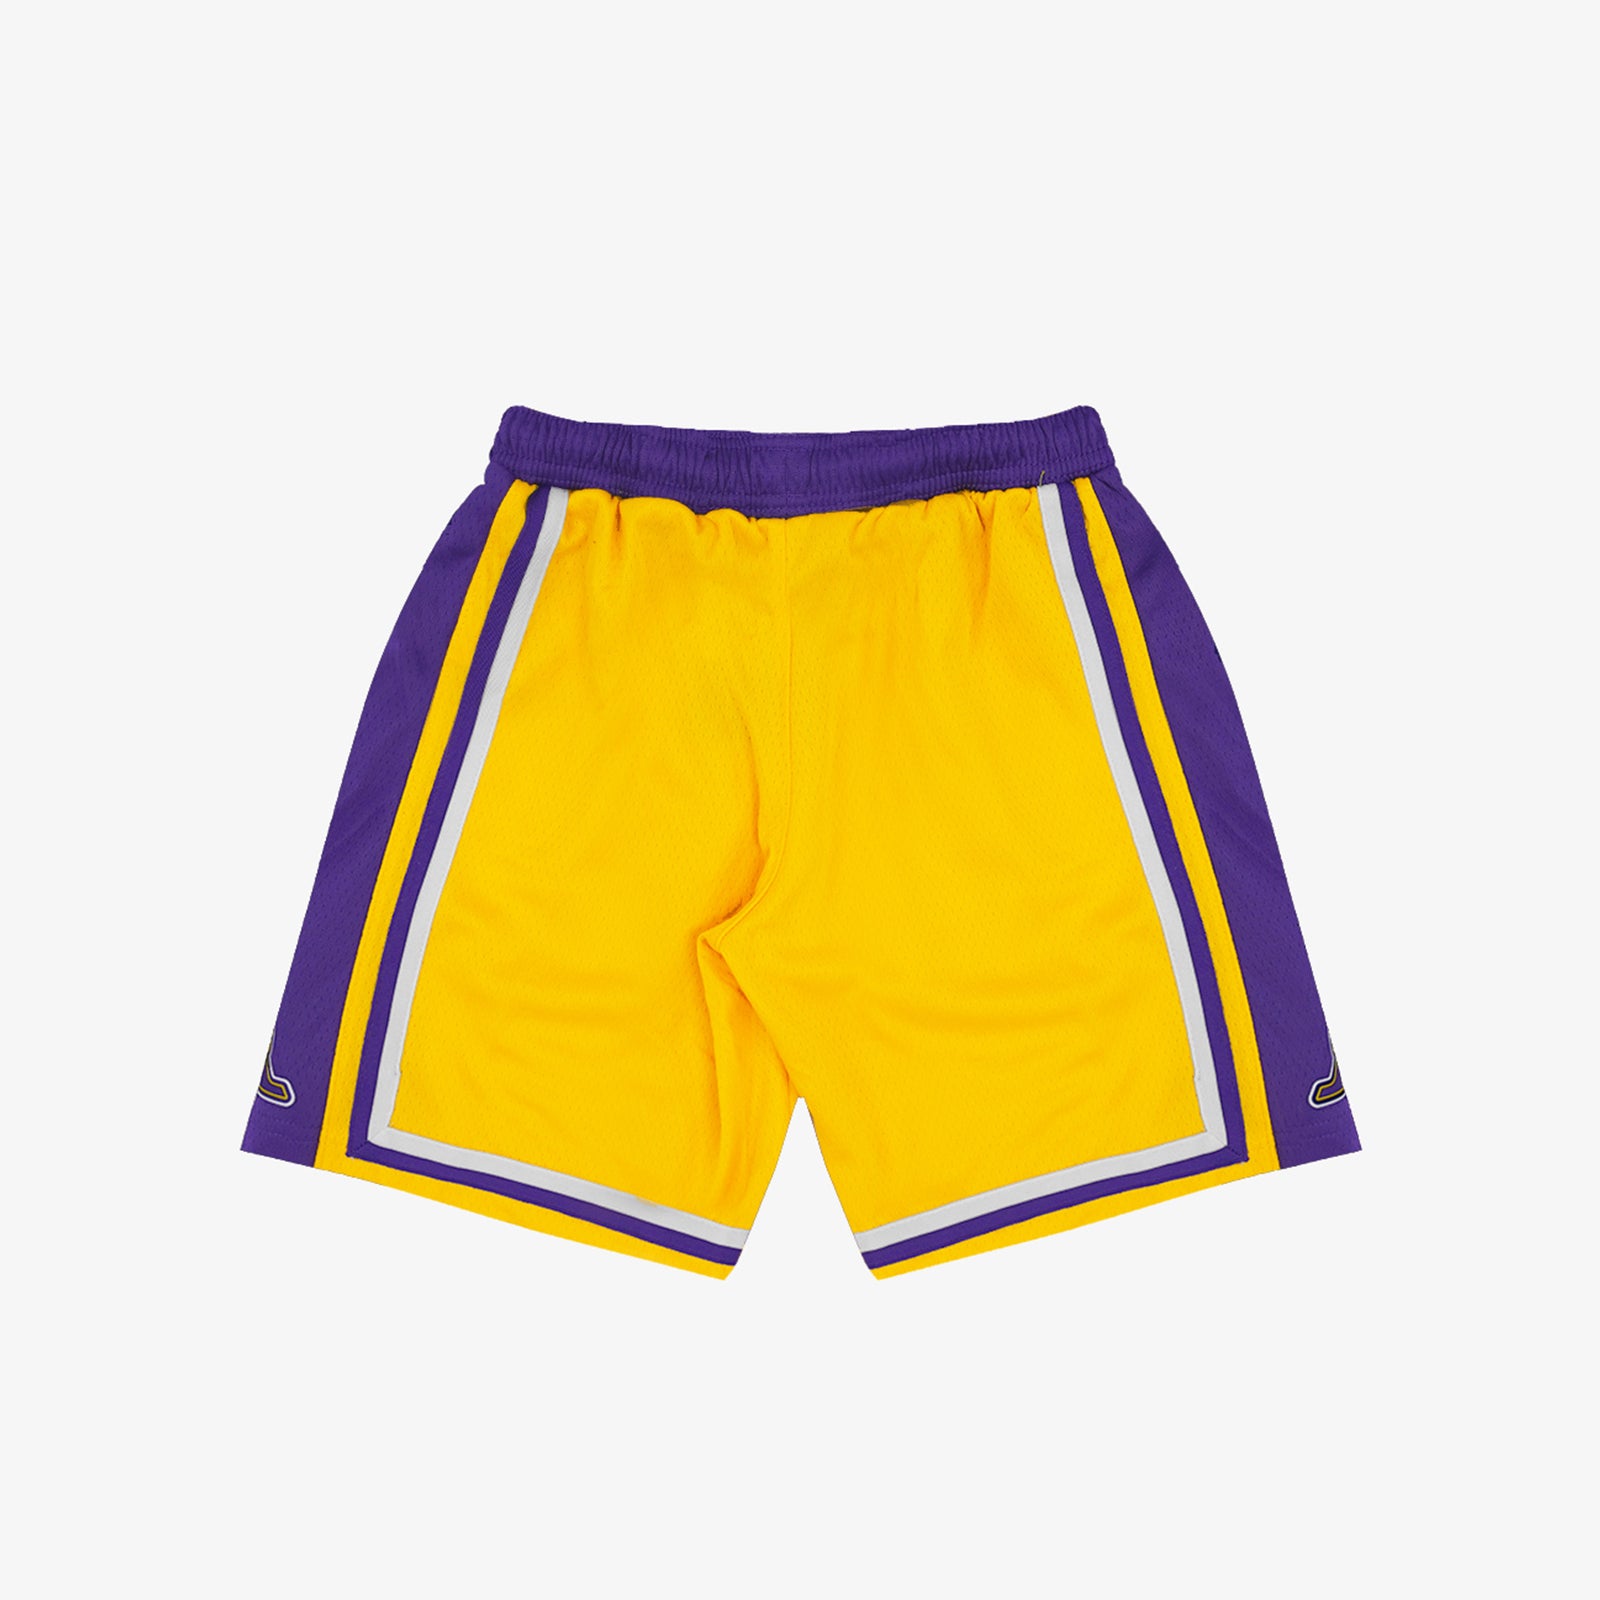 NBA Junior Lakers Basketball Short - Yellow - Size M/B